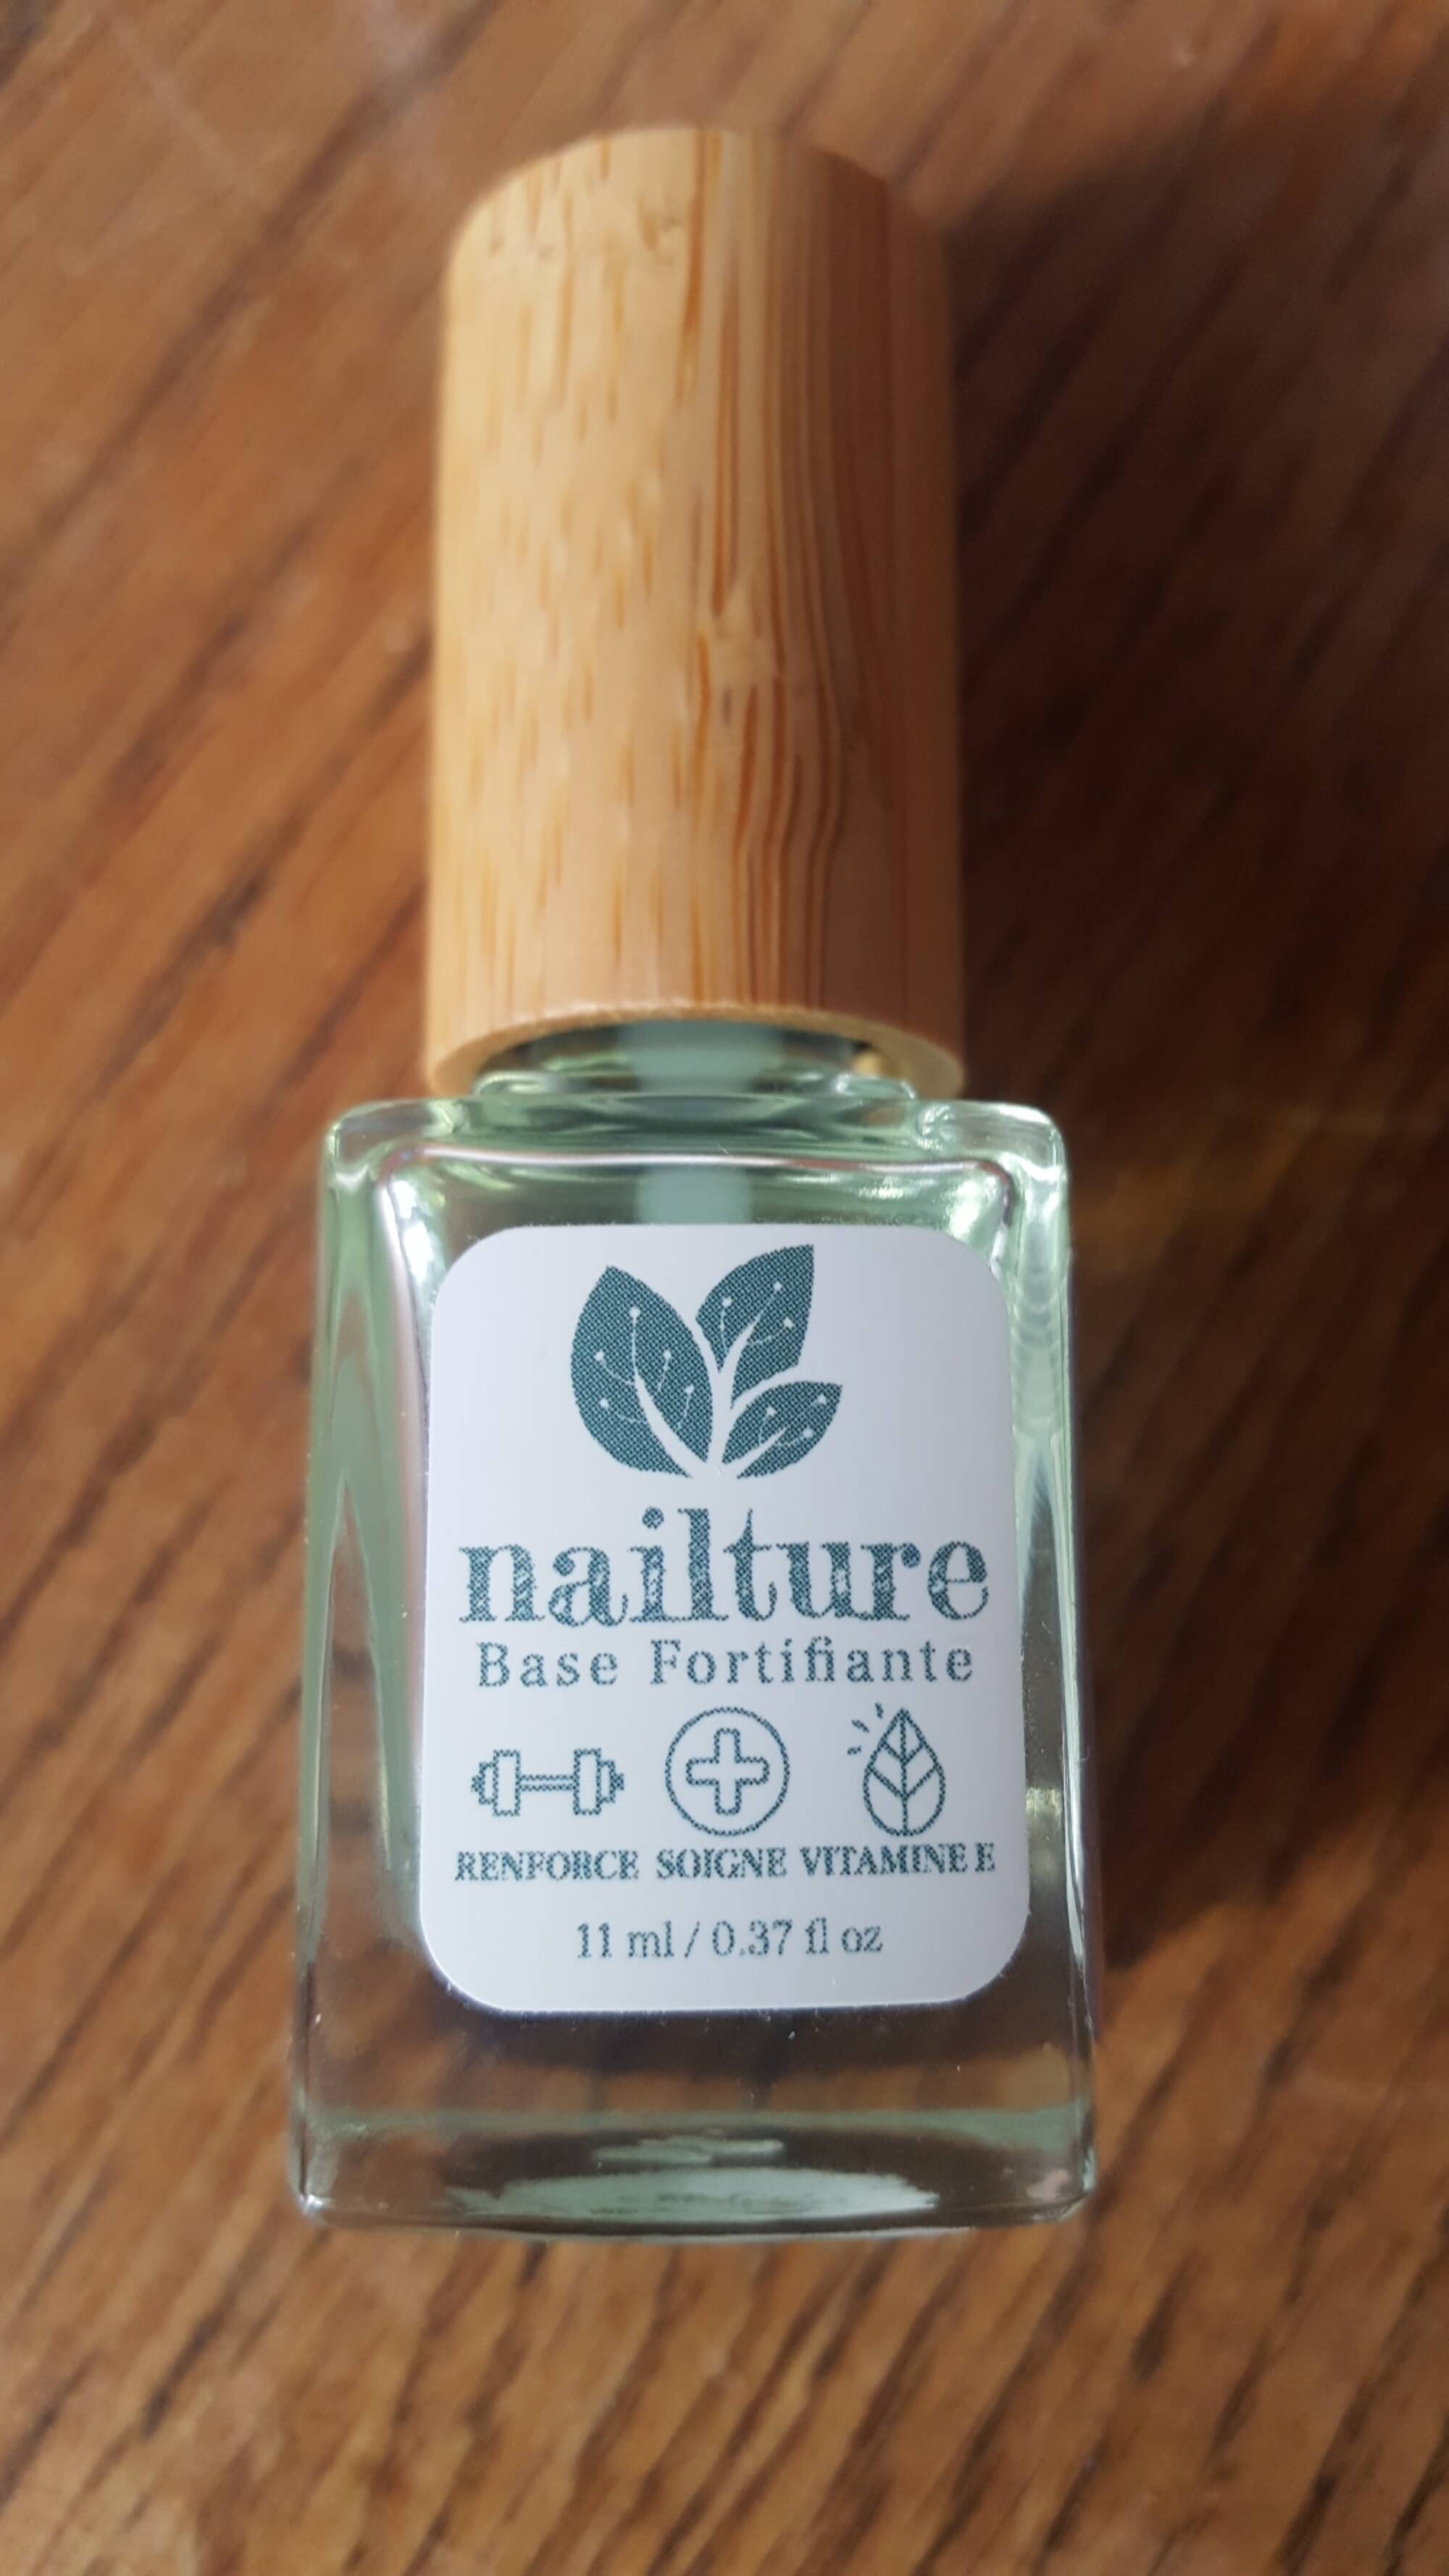 NAILTURE - Base fortifiante - Renforce soigne vitamine E